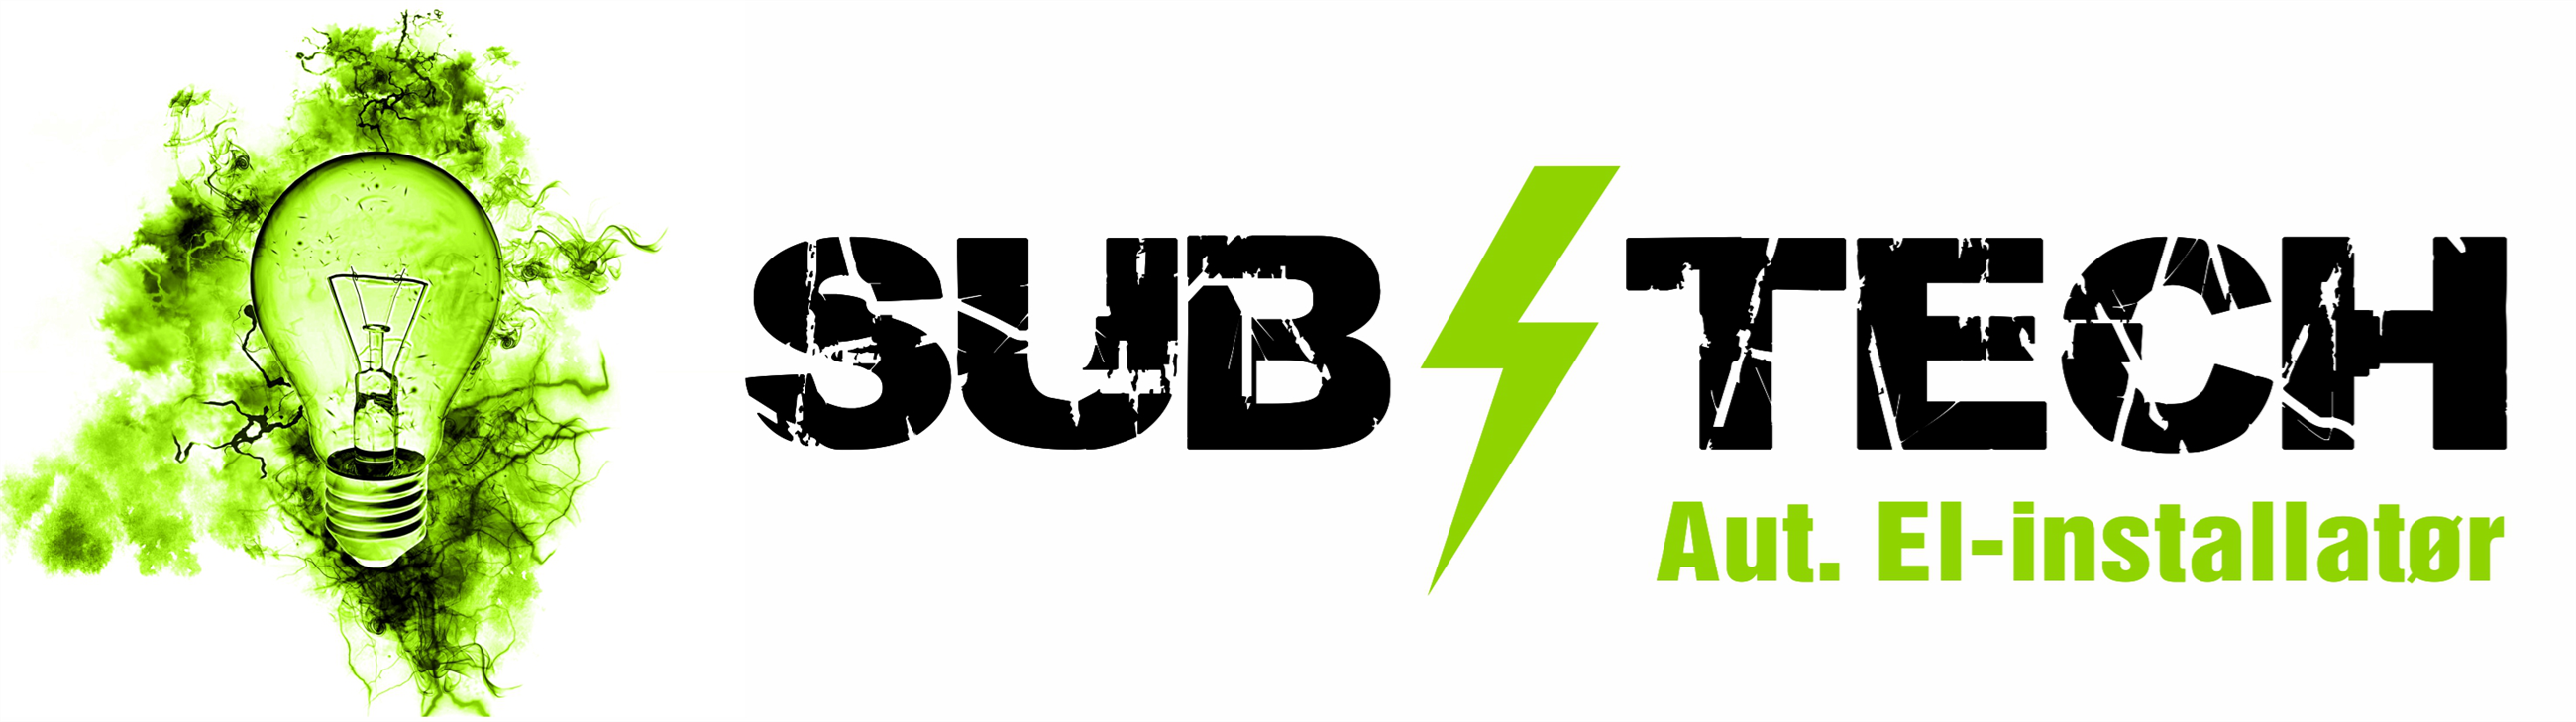 subtech logo png